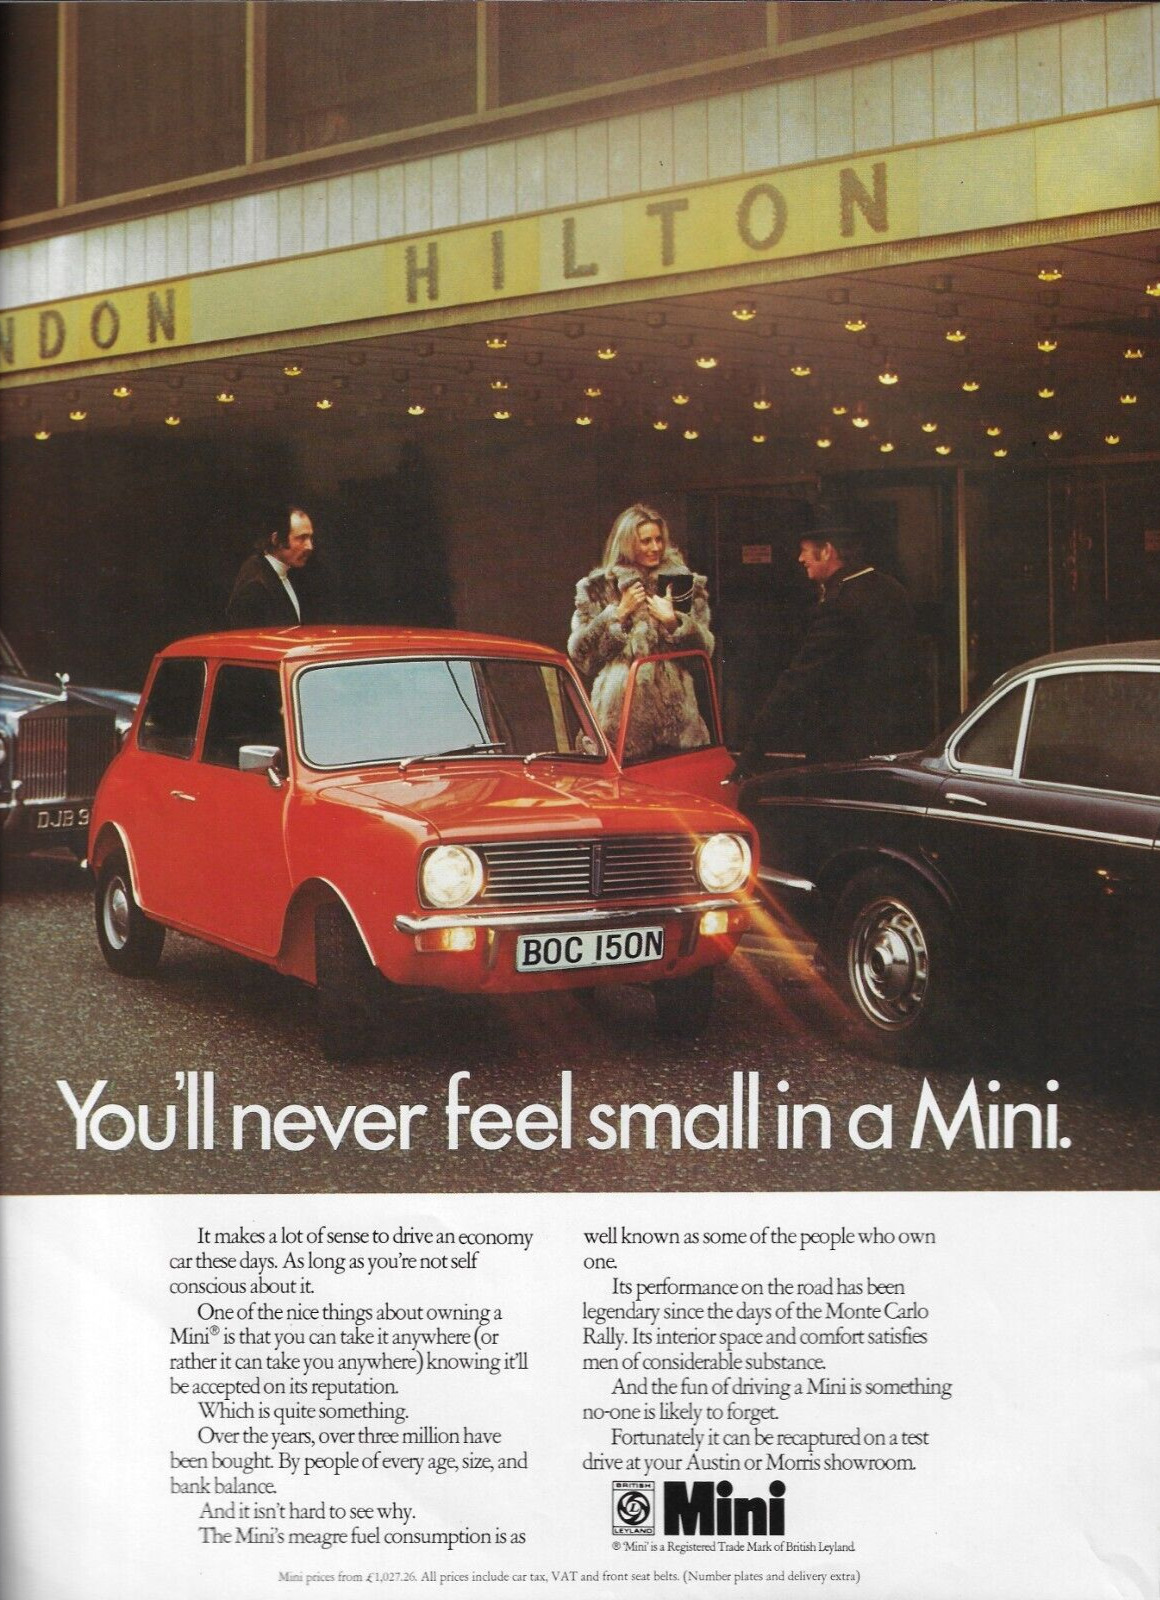 1981 British Leyland Mini Clubman Red London Hilton Fur Coat Vintage Print Ad x